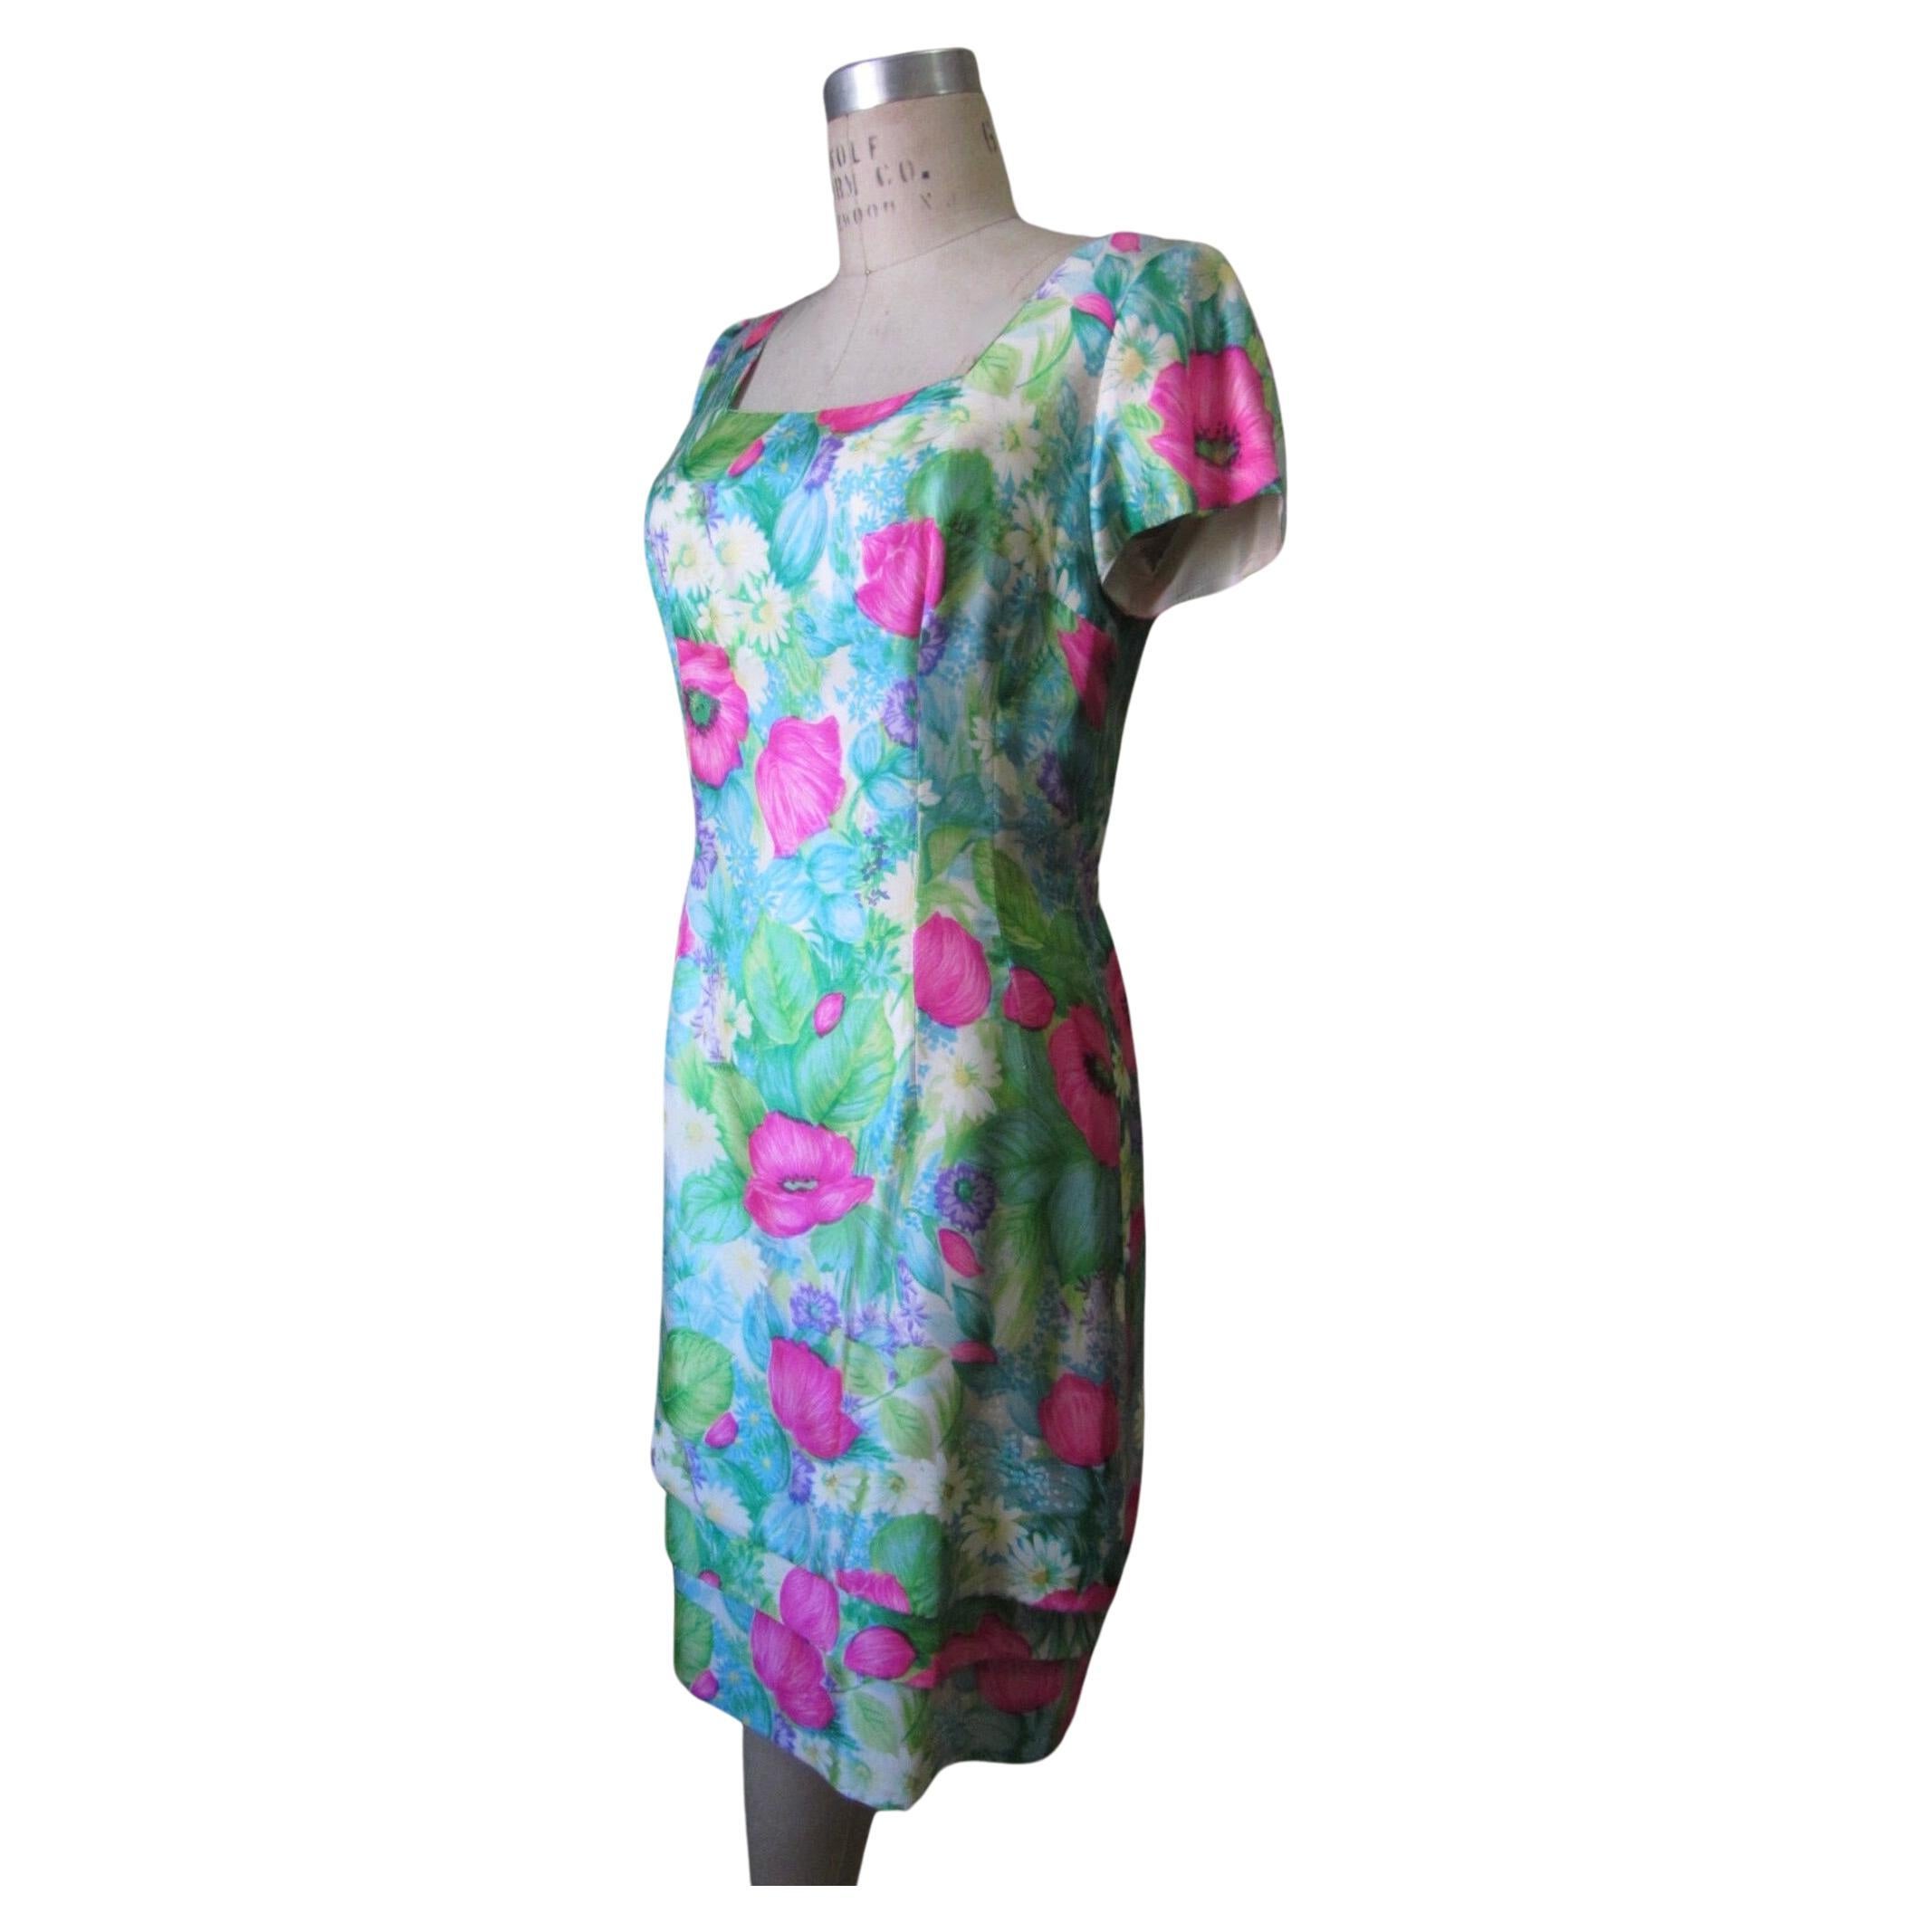 Mr. Blackwell Silk Floral Print Dress, Circa 1960s For Sale